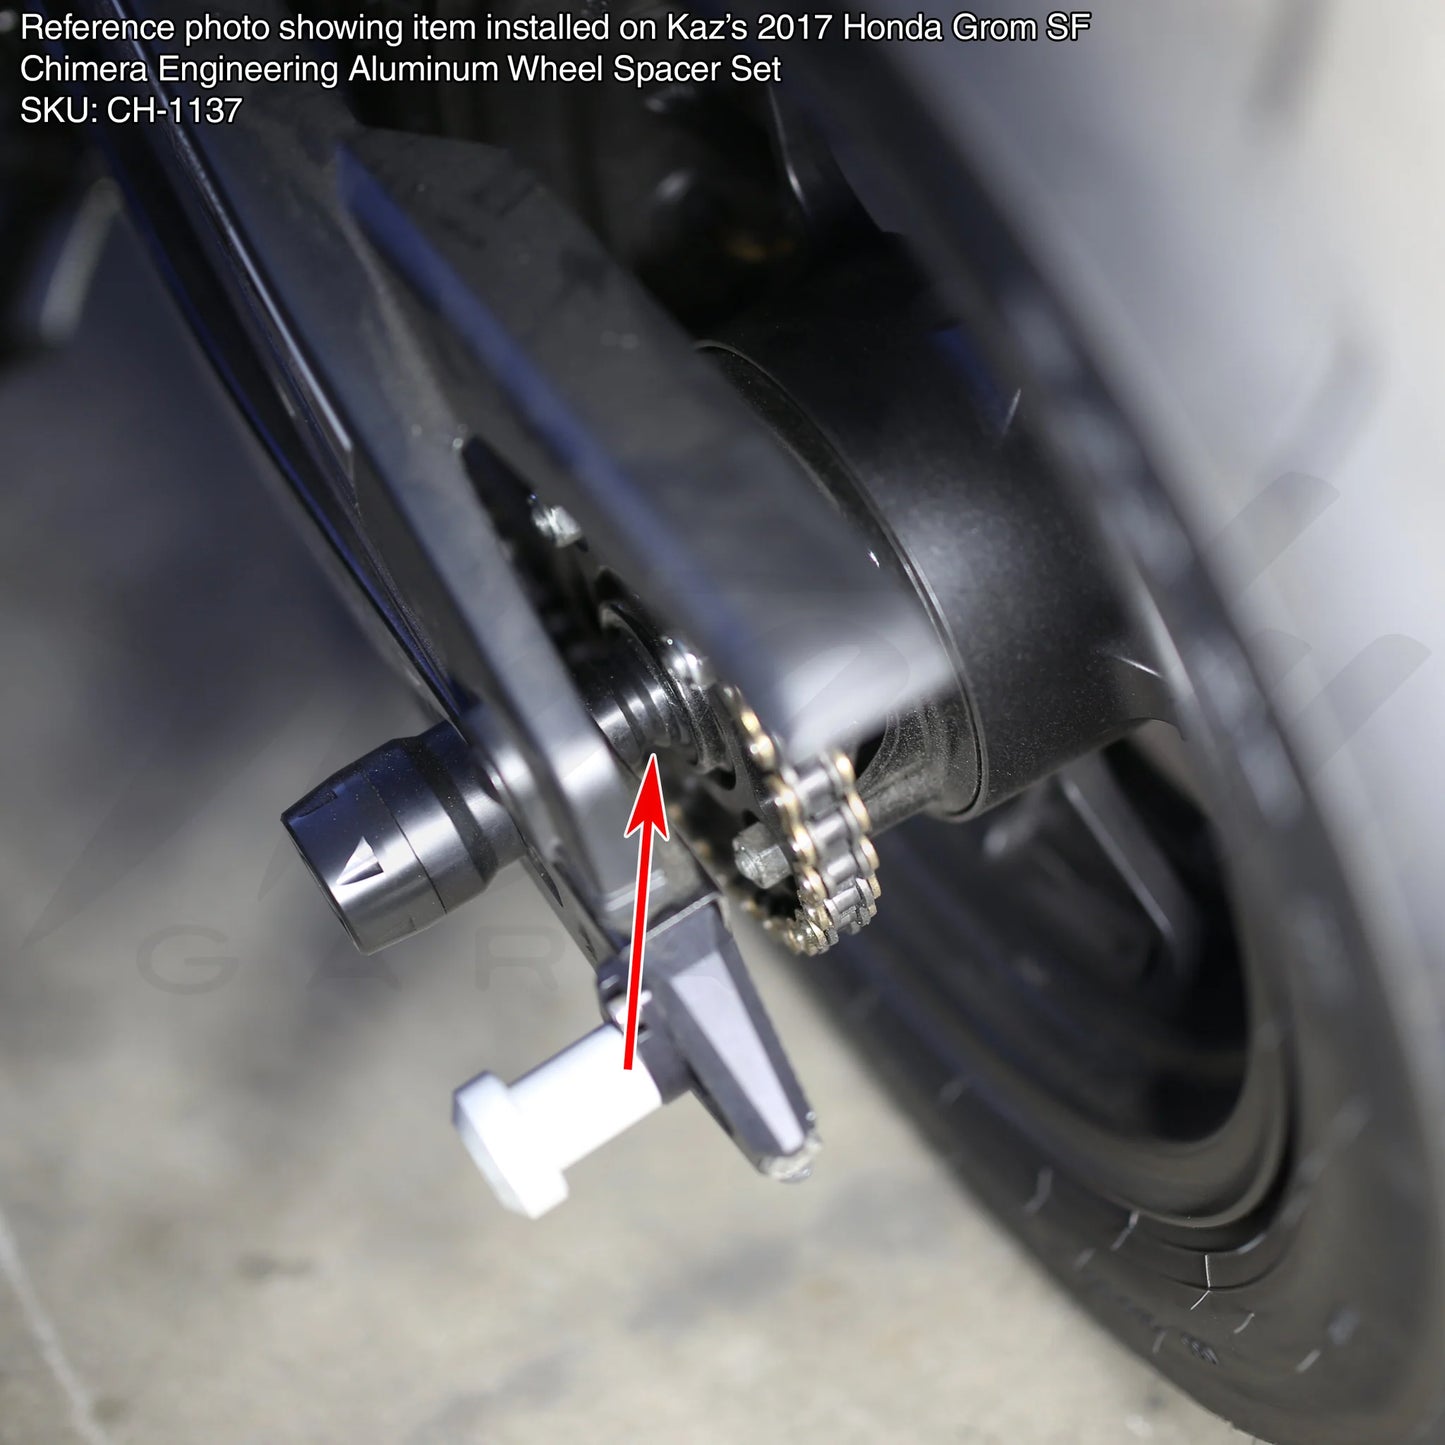 Chimera Engineering Aluminum Wheel Spacer Set - Honda Grom 125 (2014-2020)